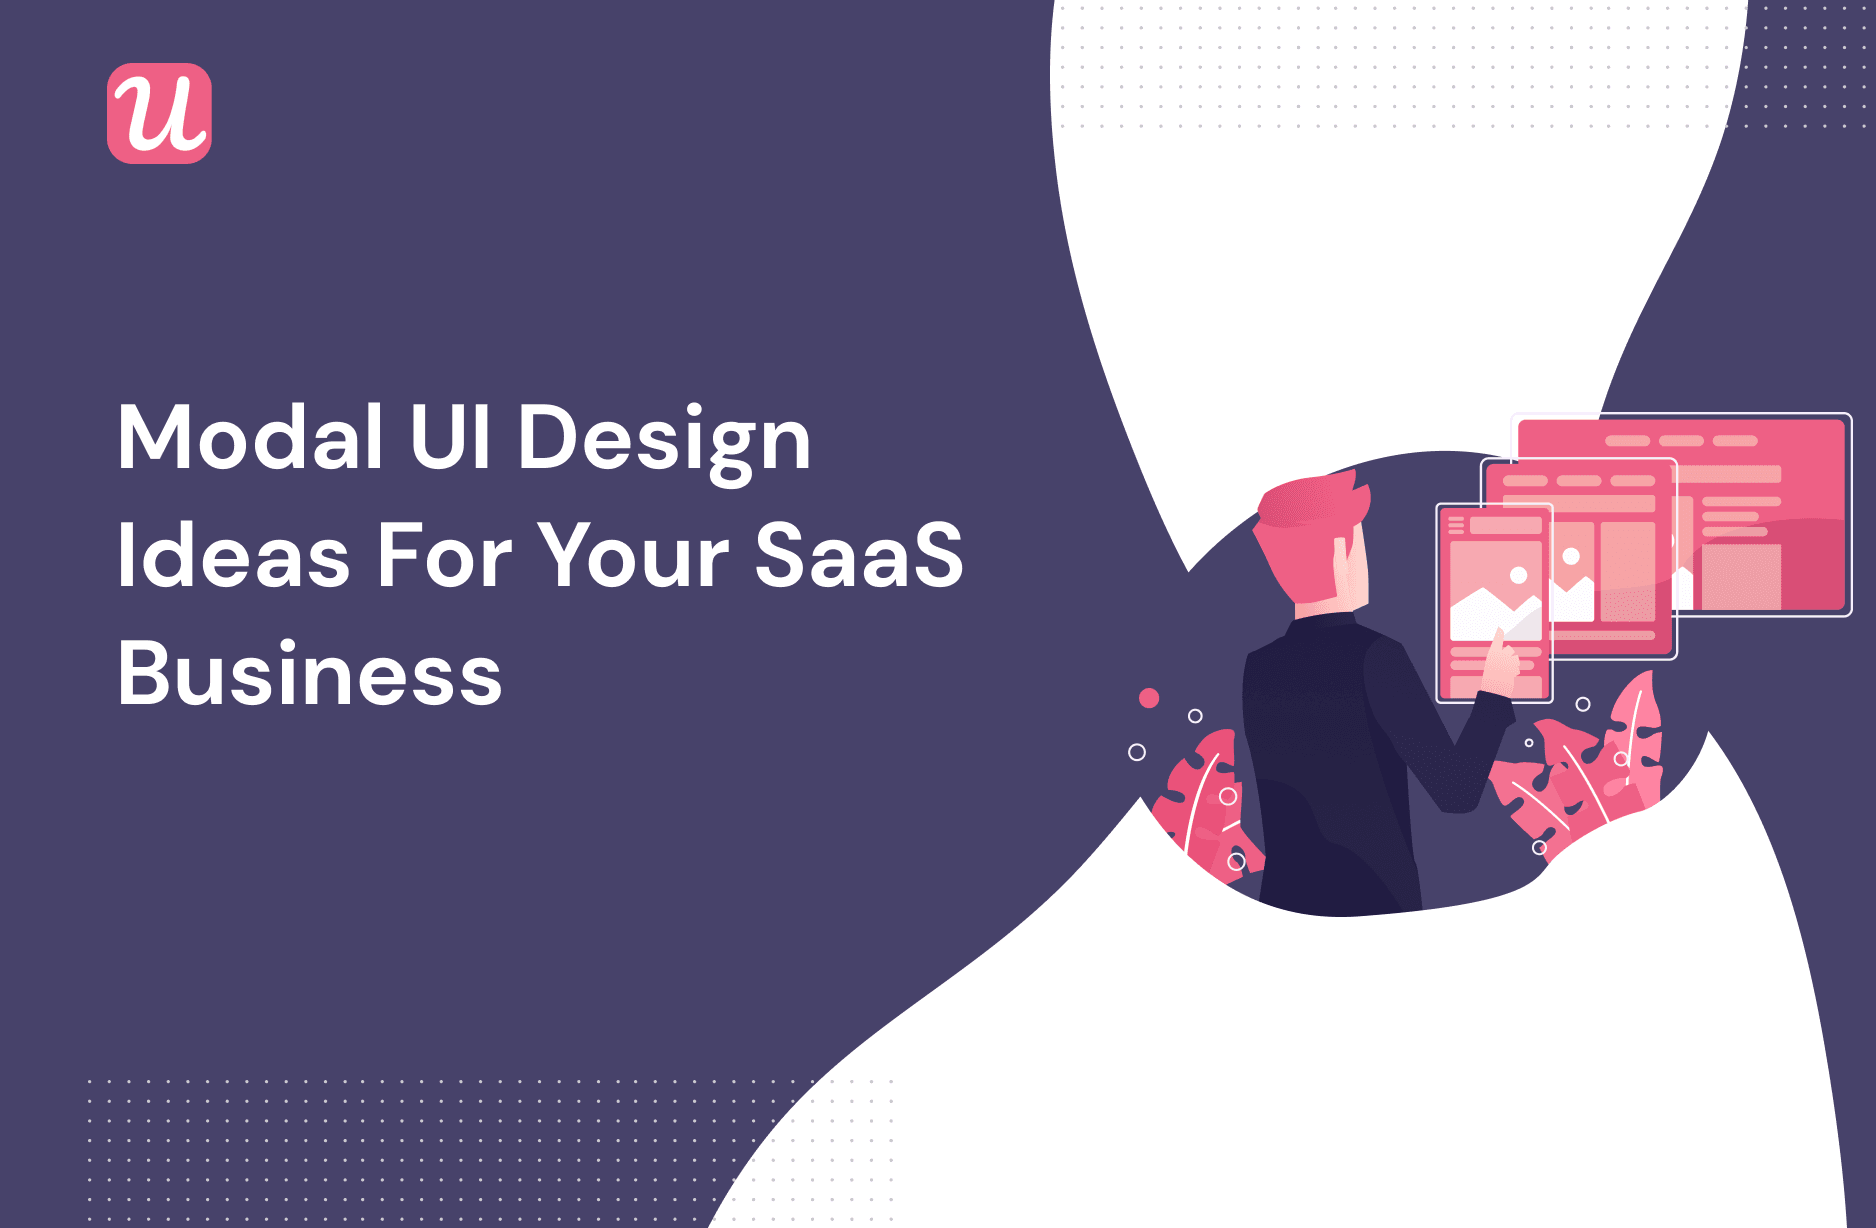 Modal UI design ideas for your SaaS business